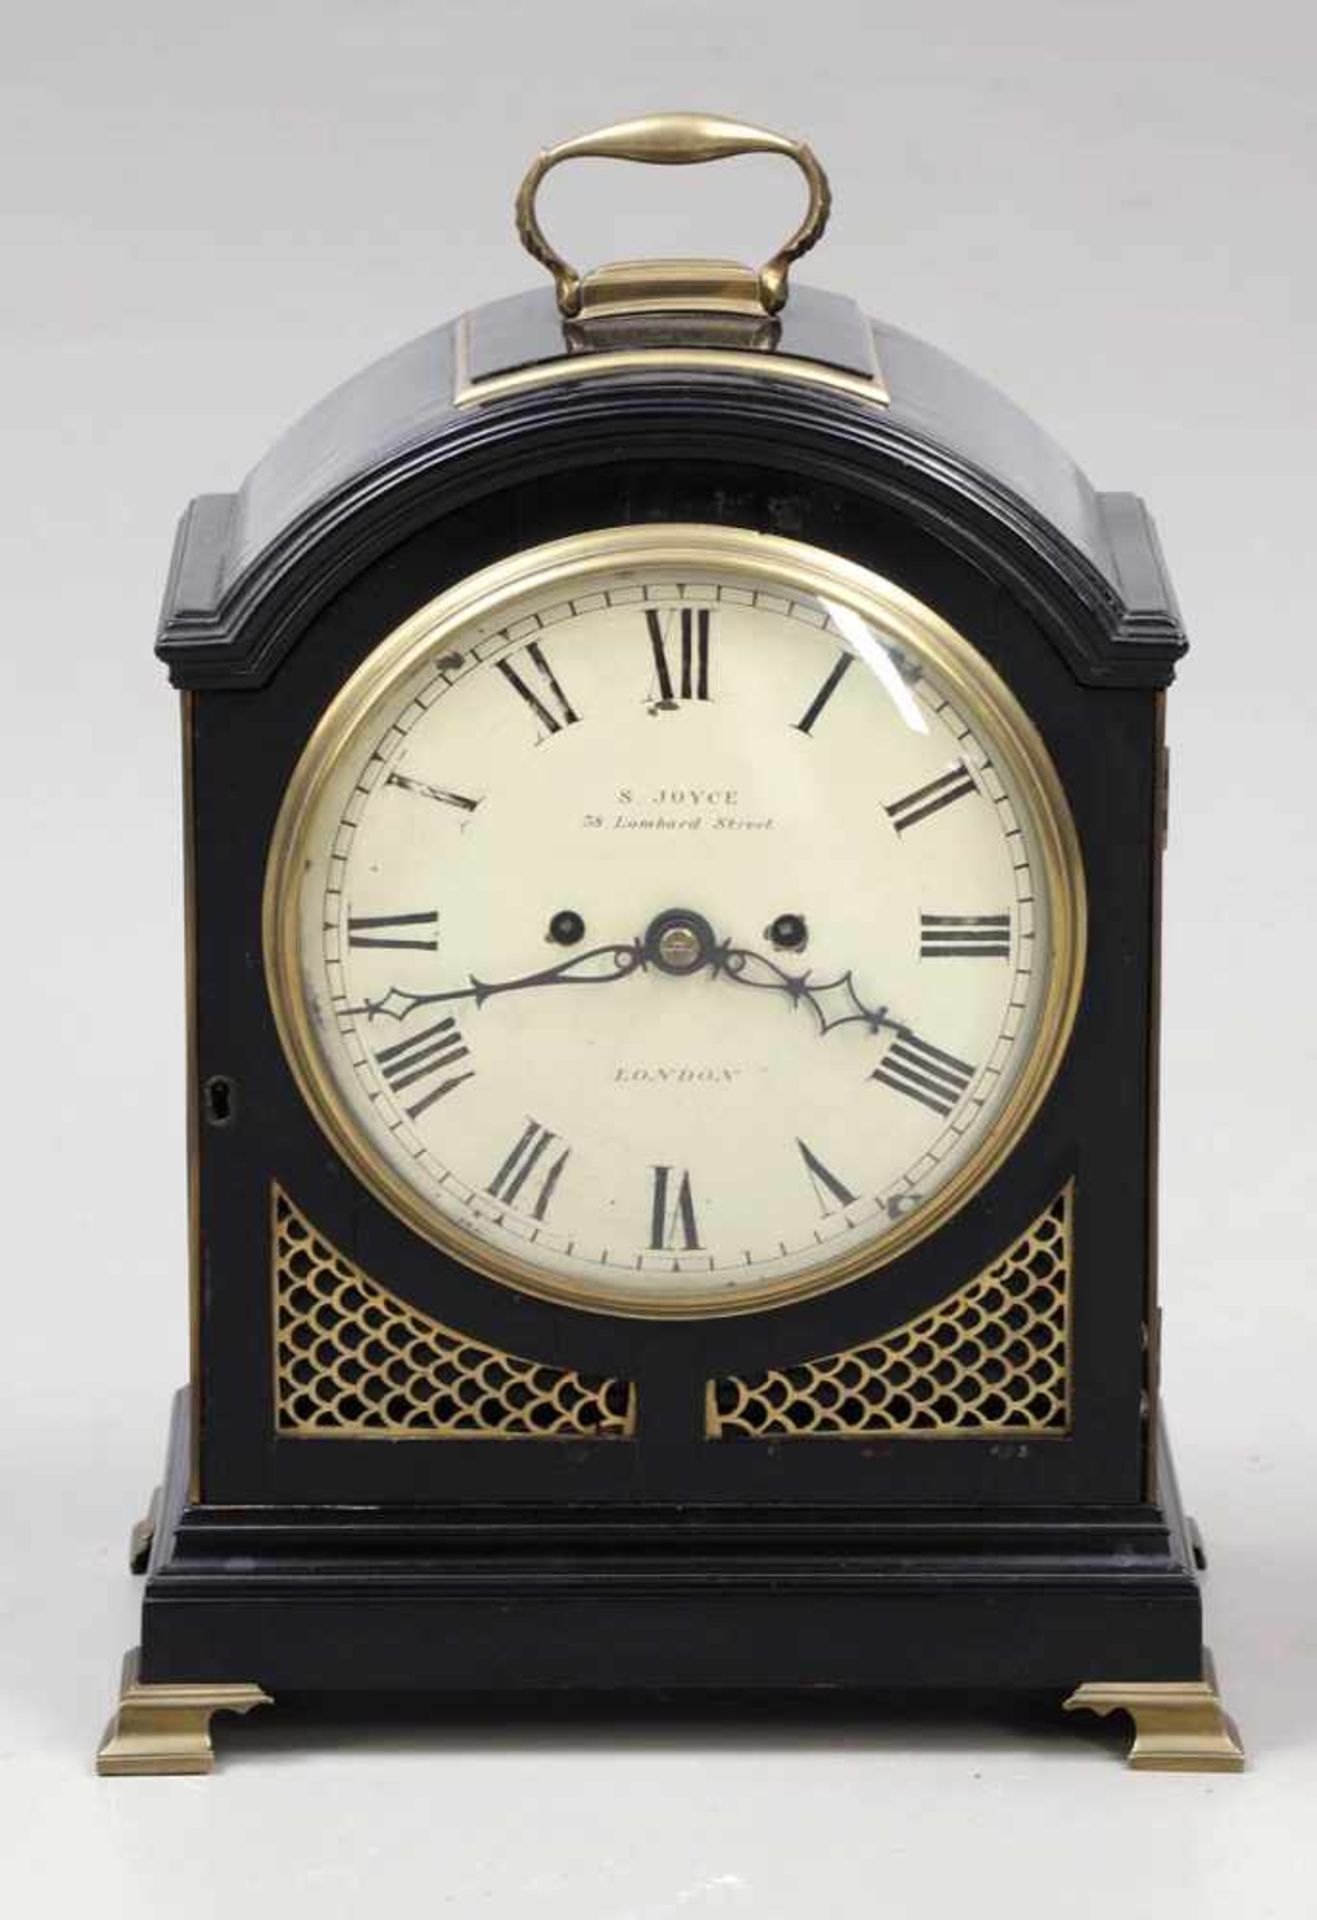 Bracket Clock Samuel Joyce/London/England, um 1790. Ebonisiertes Holz. 44,5 x 31 x 19,5 cm. Schlag